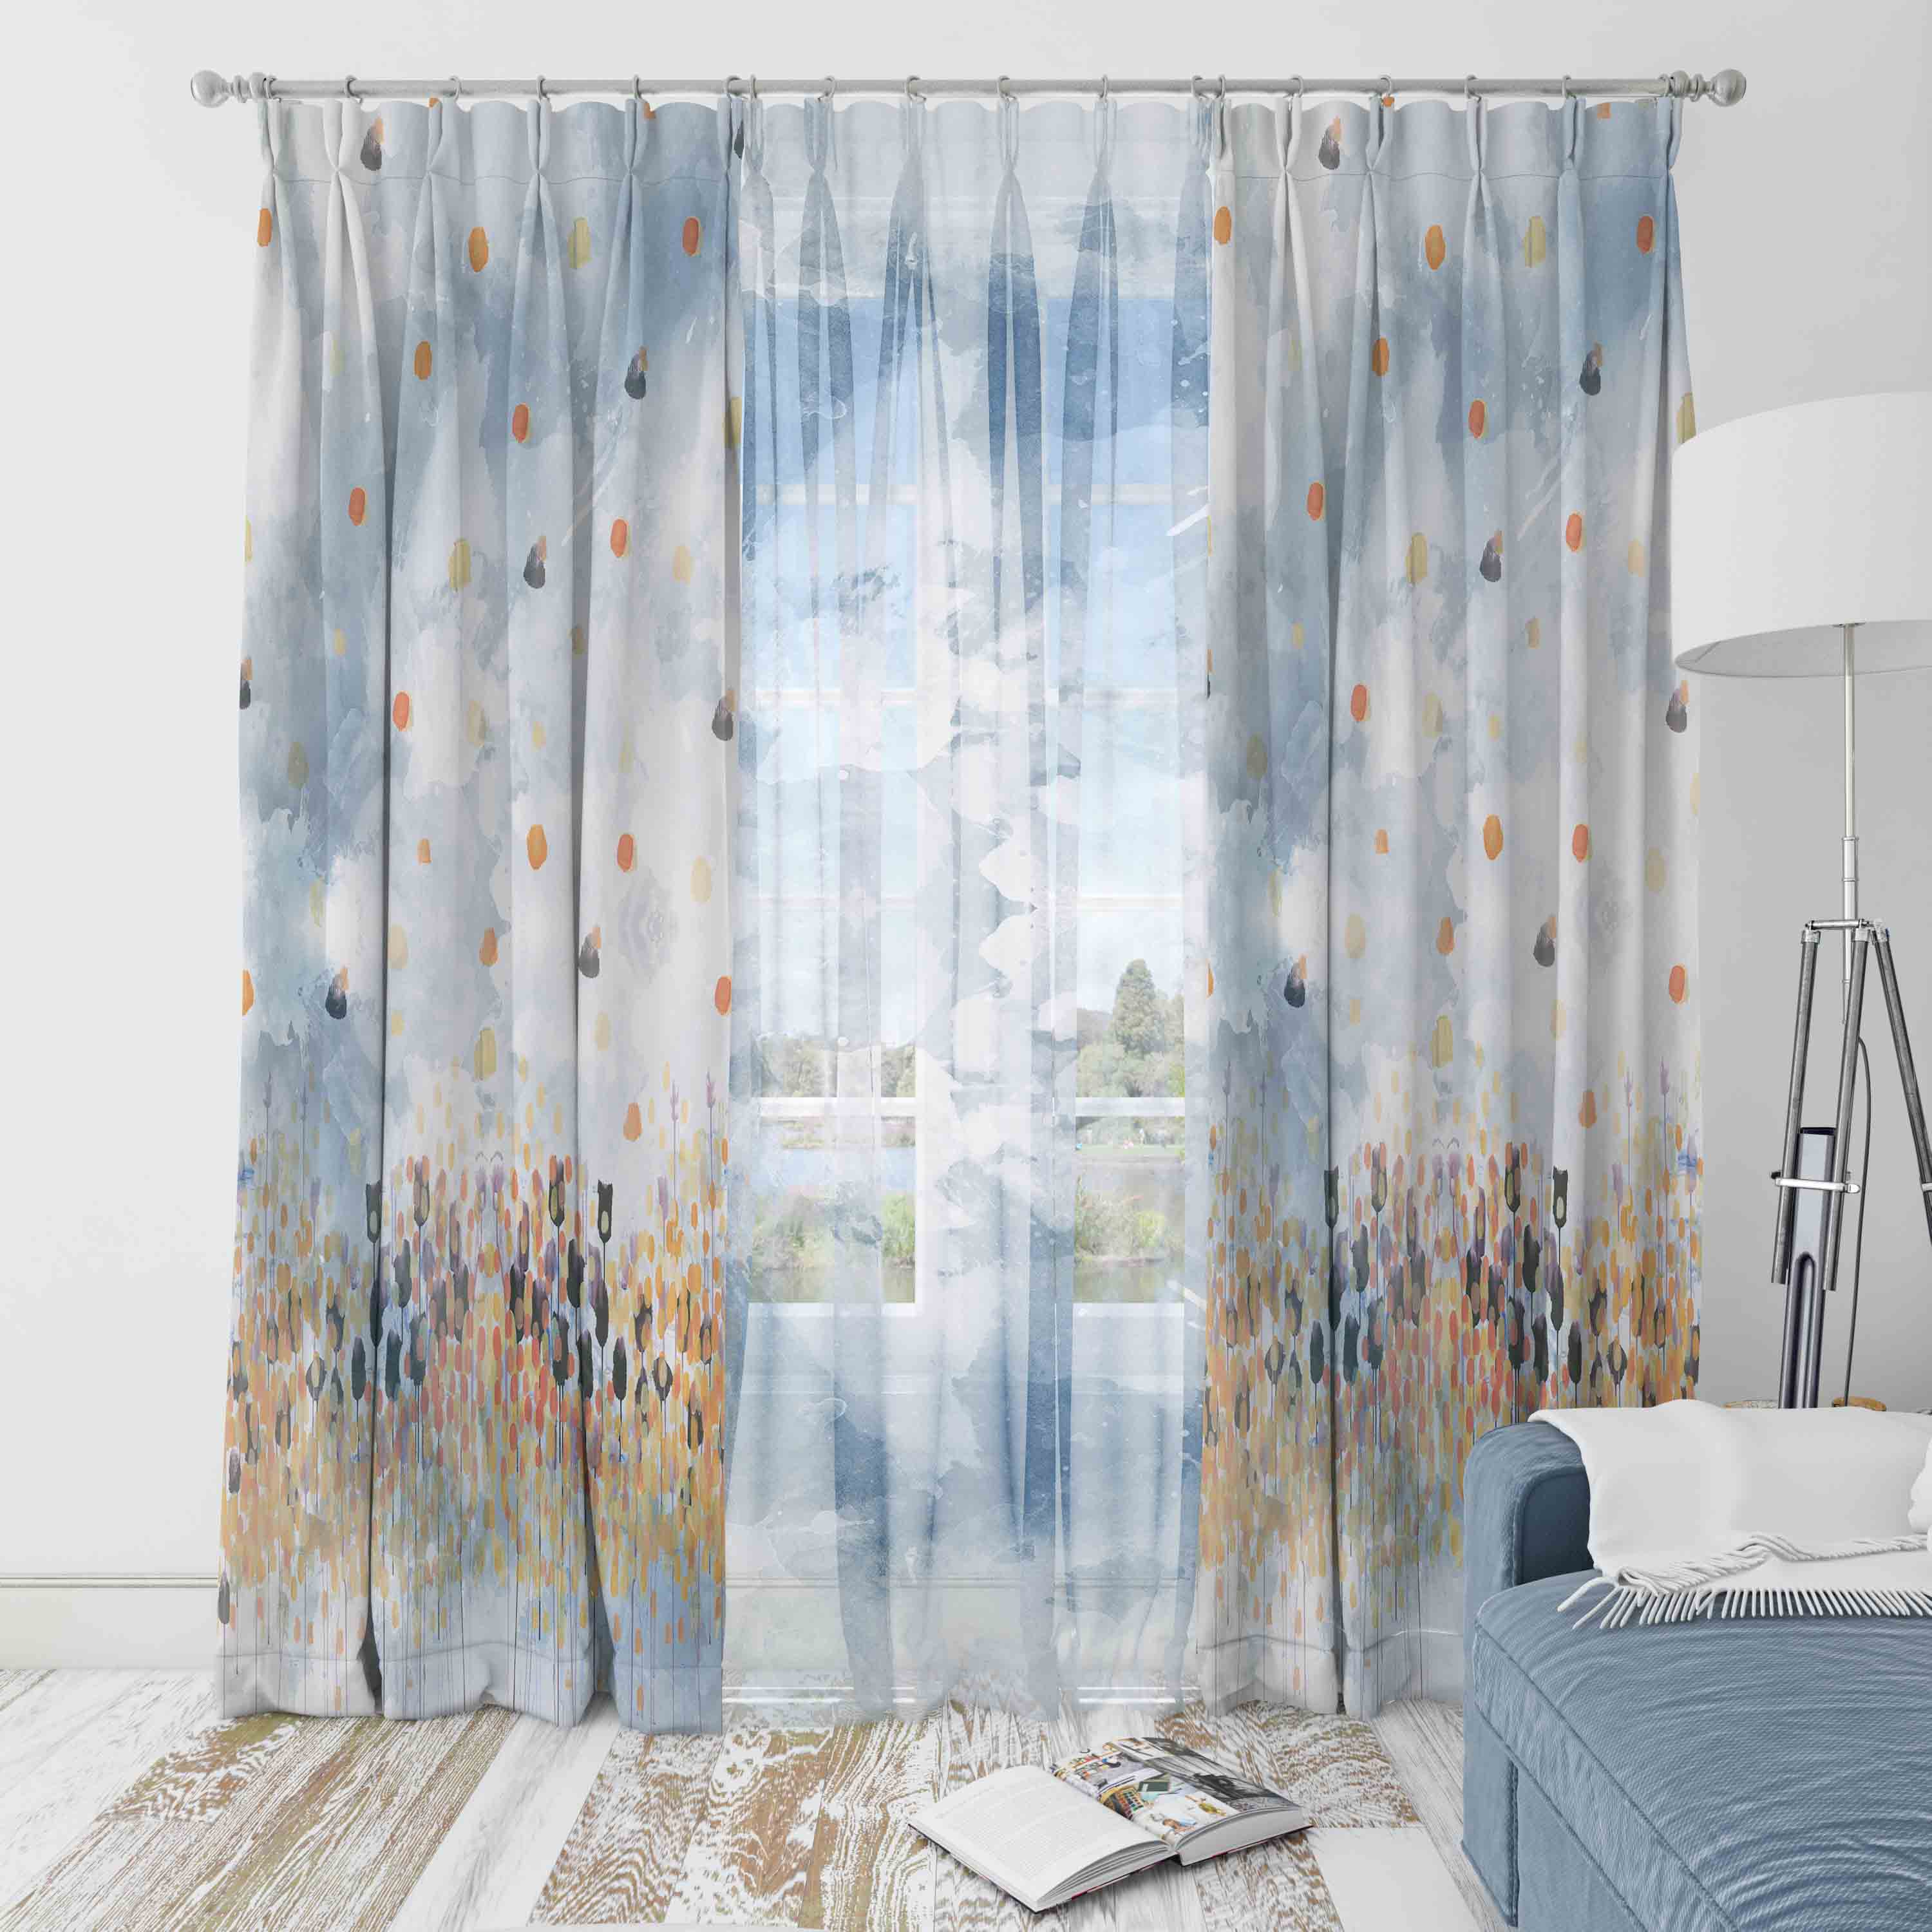 Customize fabric curtain